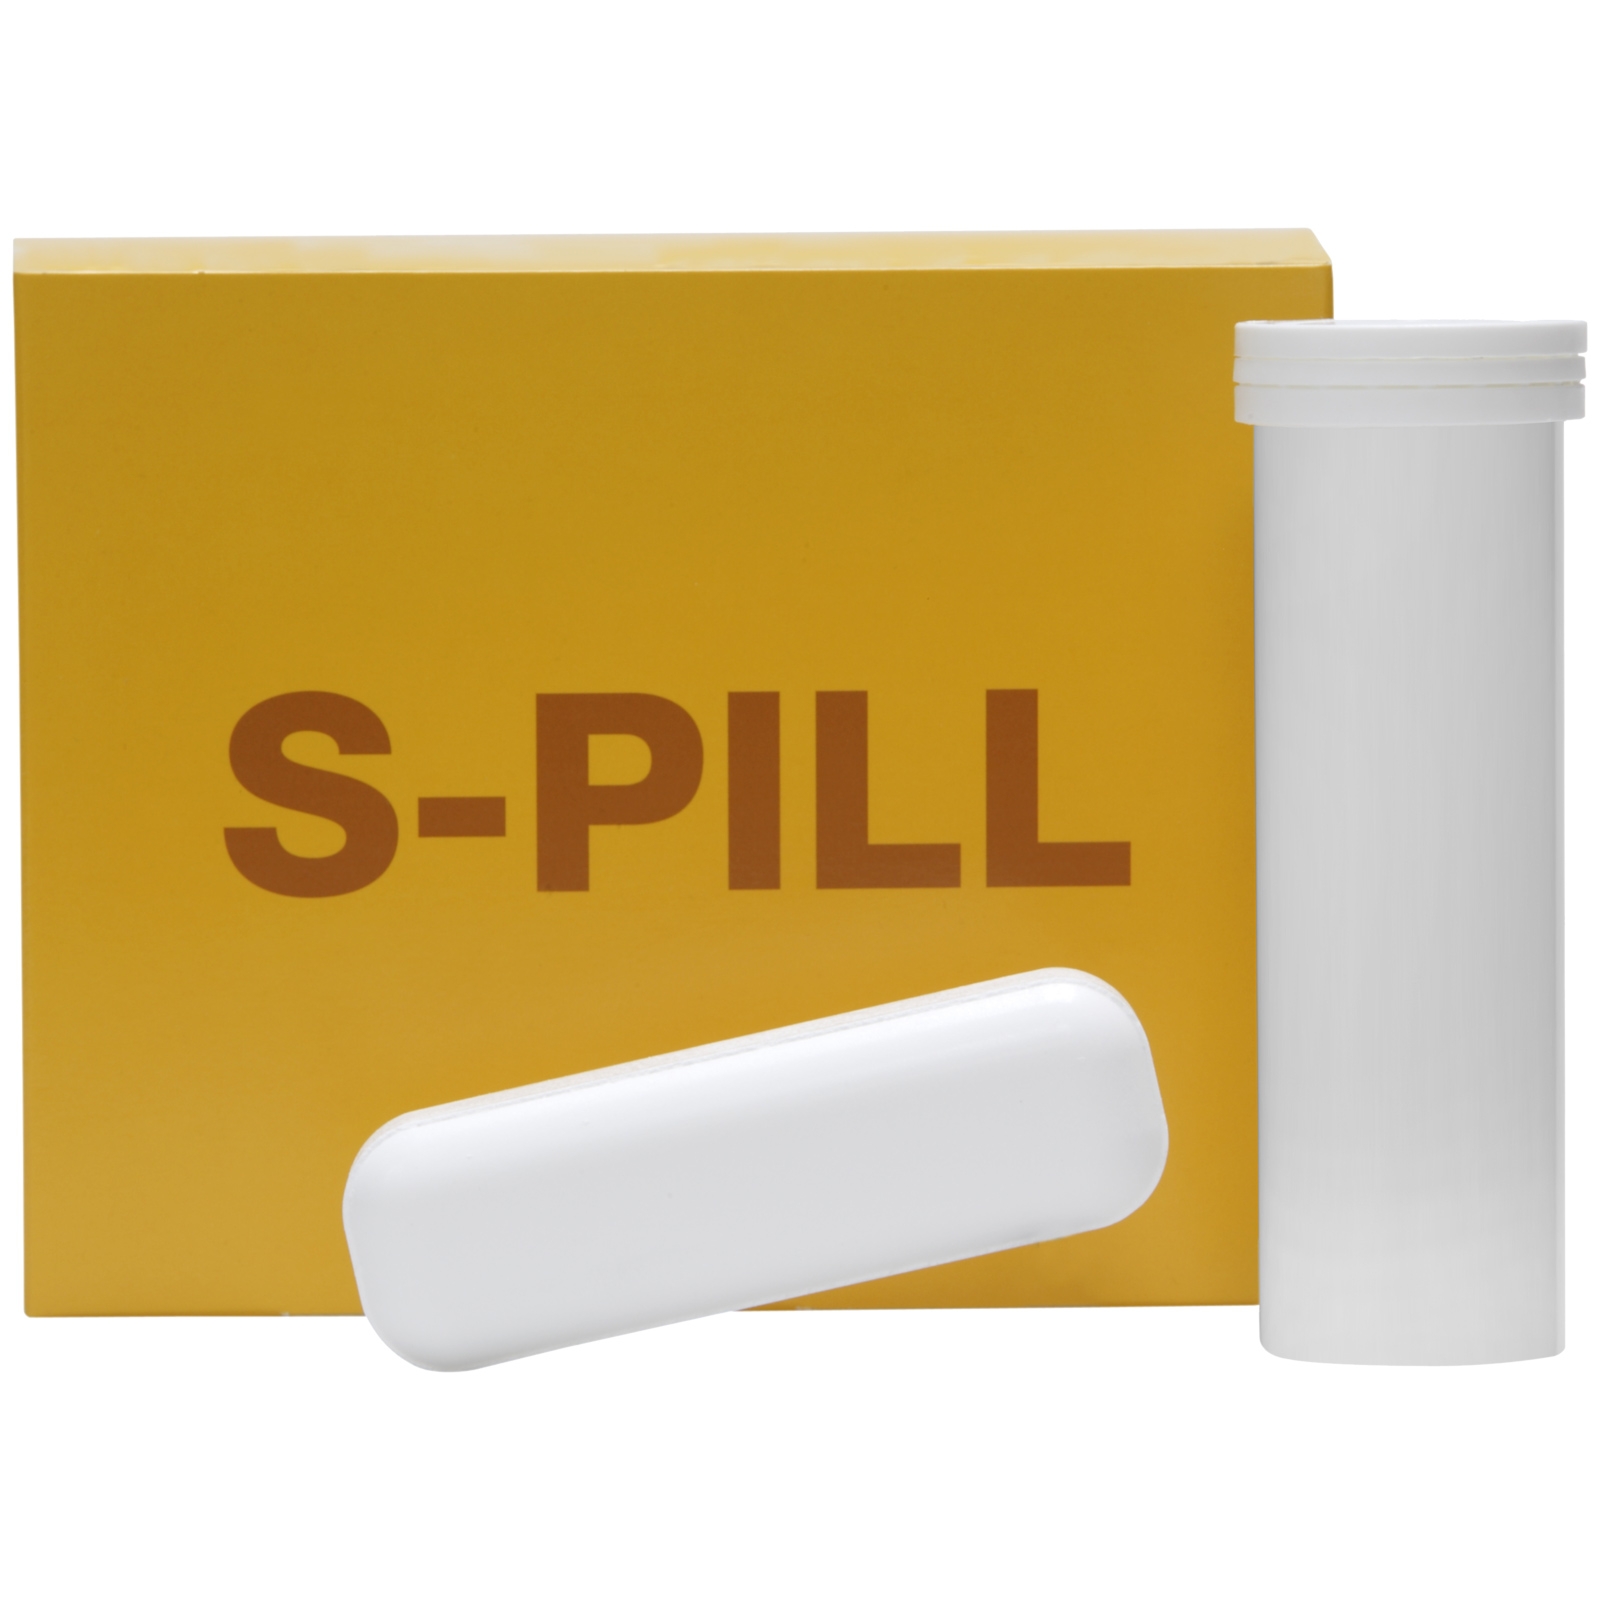 S-PILL for rumen stimulation 4 x 100 g